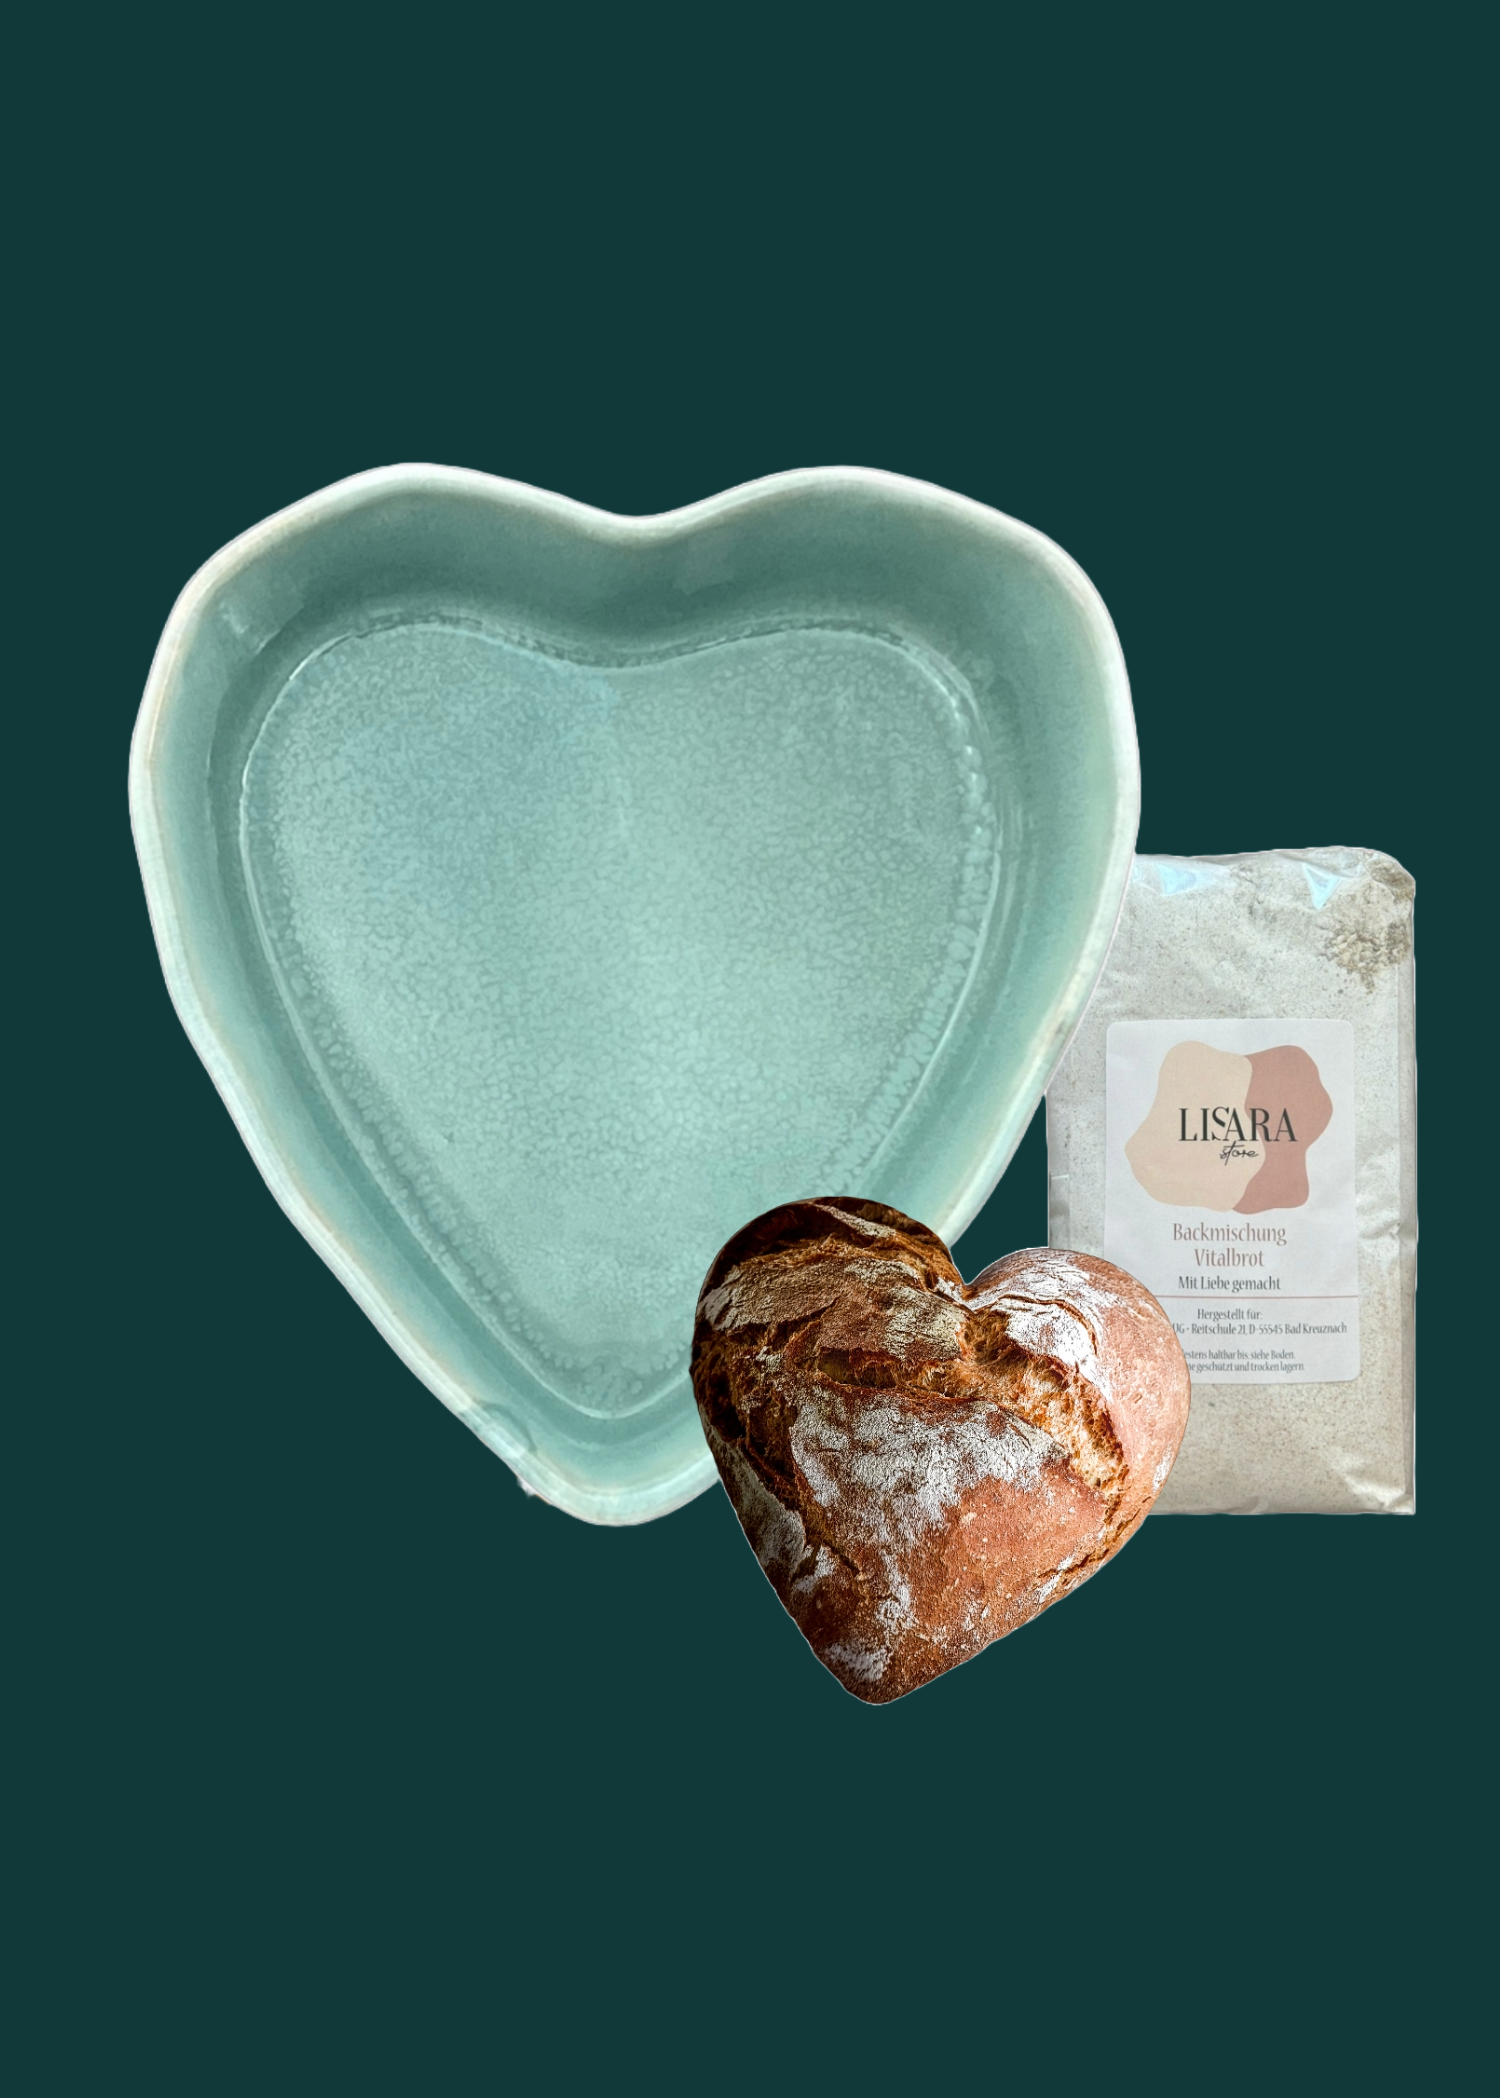 Herzschüssel große Liebe - Immergrün mit Backmischung Lisara Vitalbrot